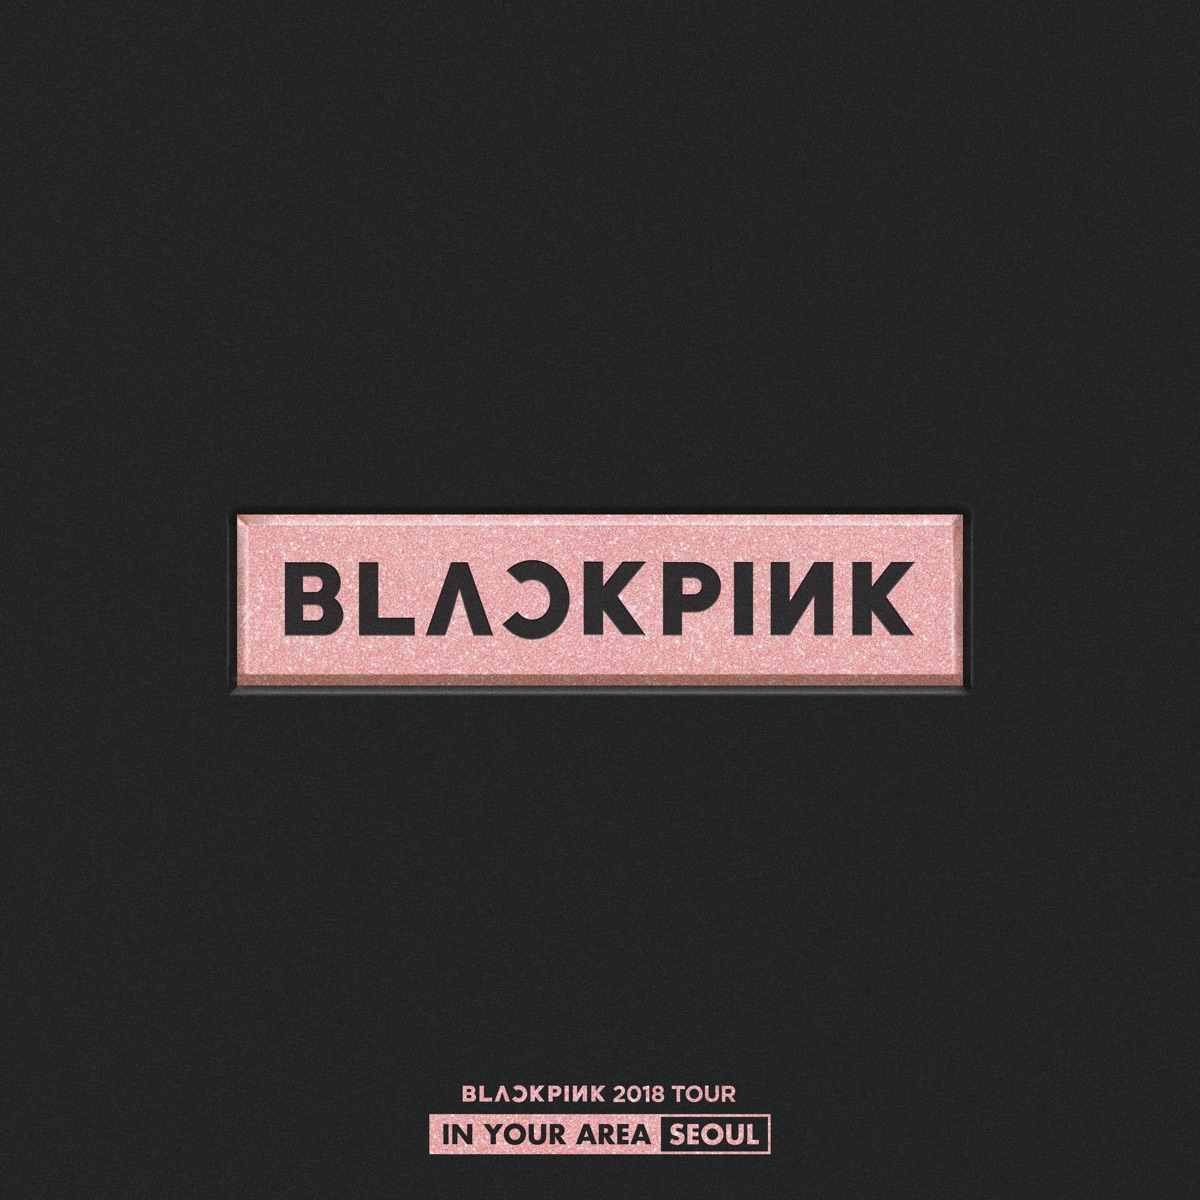 THE ALBUM - Album by BLACKPINK - Apple Music